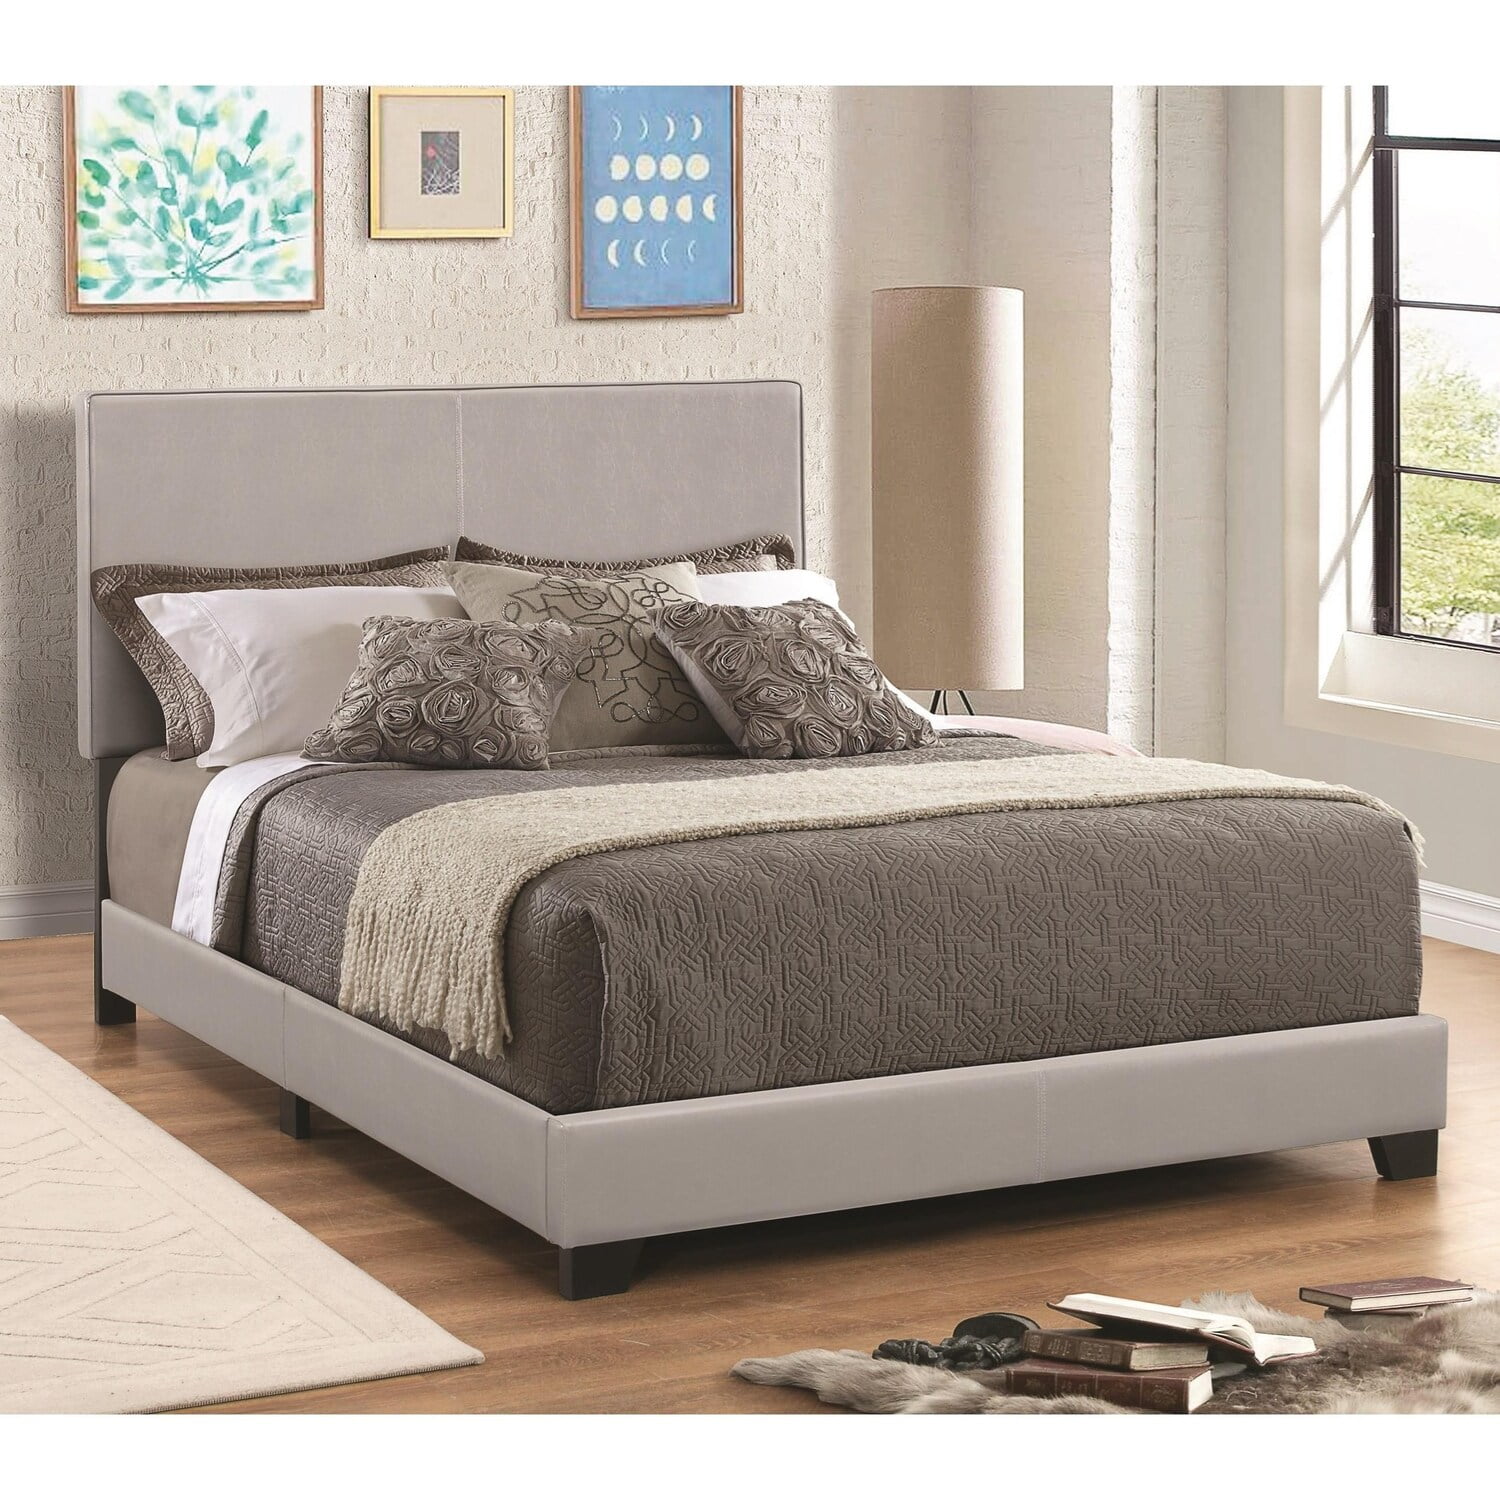 Benzara Leather Upholstered California, King Size Bed Nebraska Furniture Mart